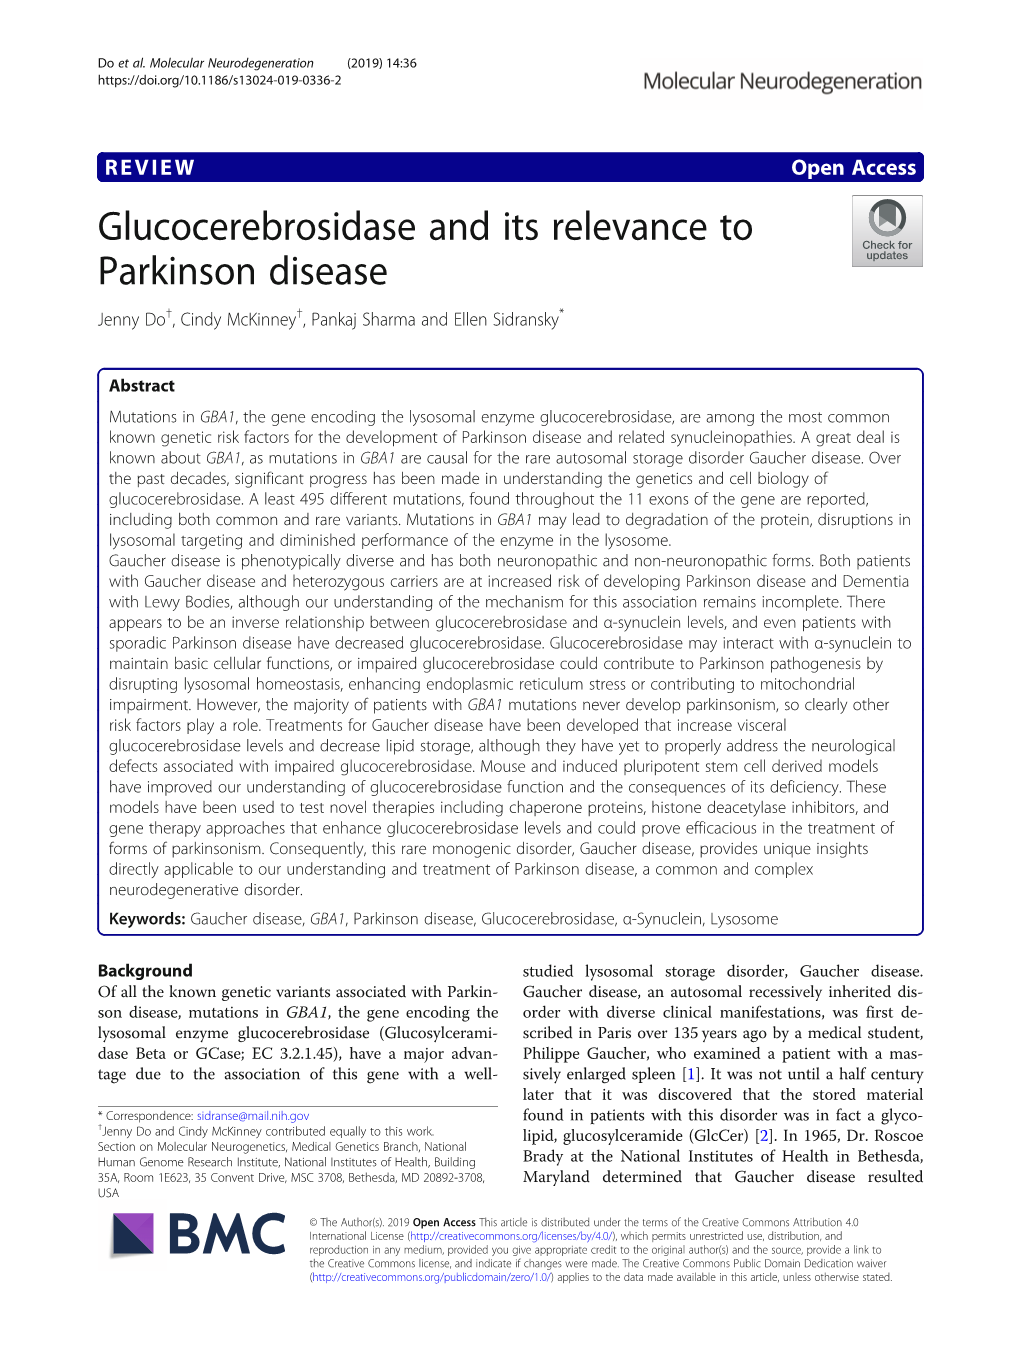 Glucocerebrosidase and Its Relevance to Parkinson Disease Jenny Do†, Cindy Mckinney†, Pankaj Sharma and Ellen Sidransky*